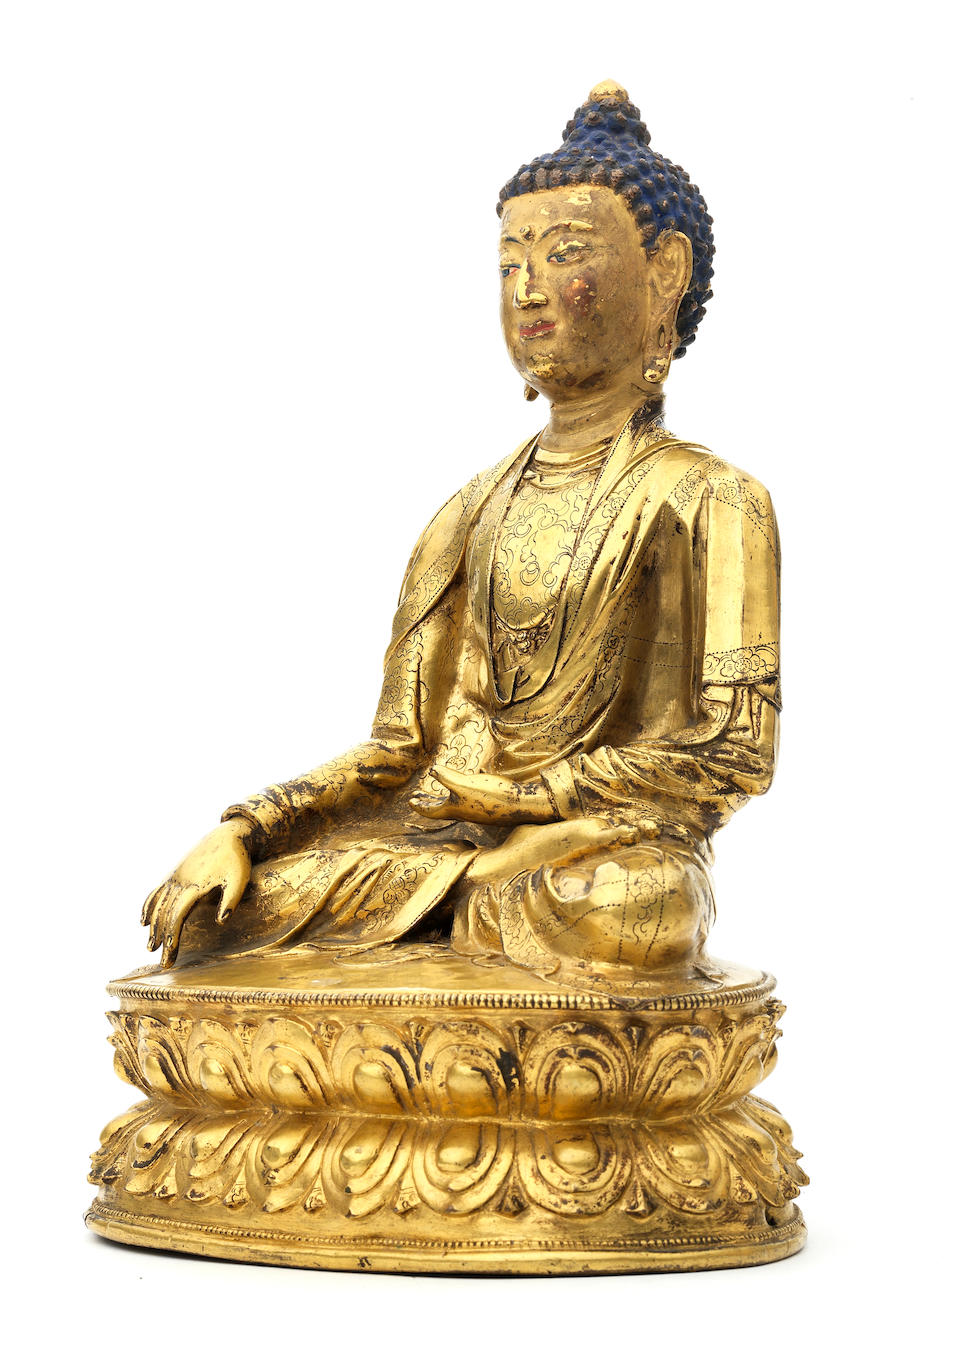 A large and rare gilt copper-alloy figure of Shakyamuni Buddha Tibet, circa 16th century